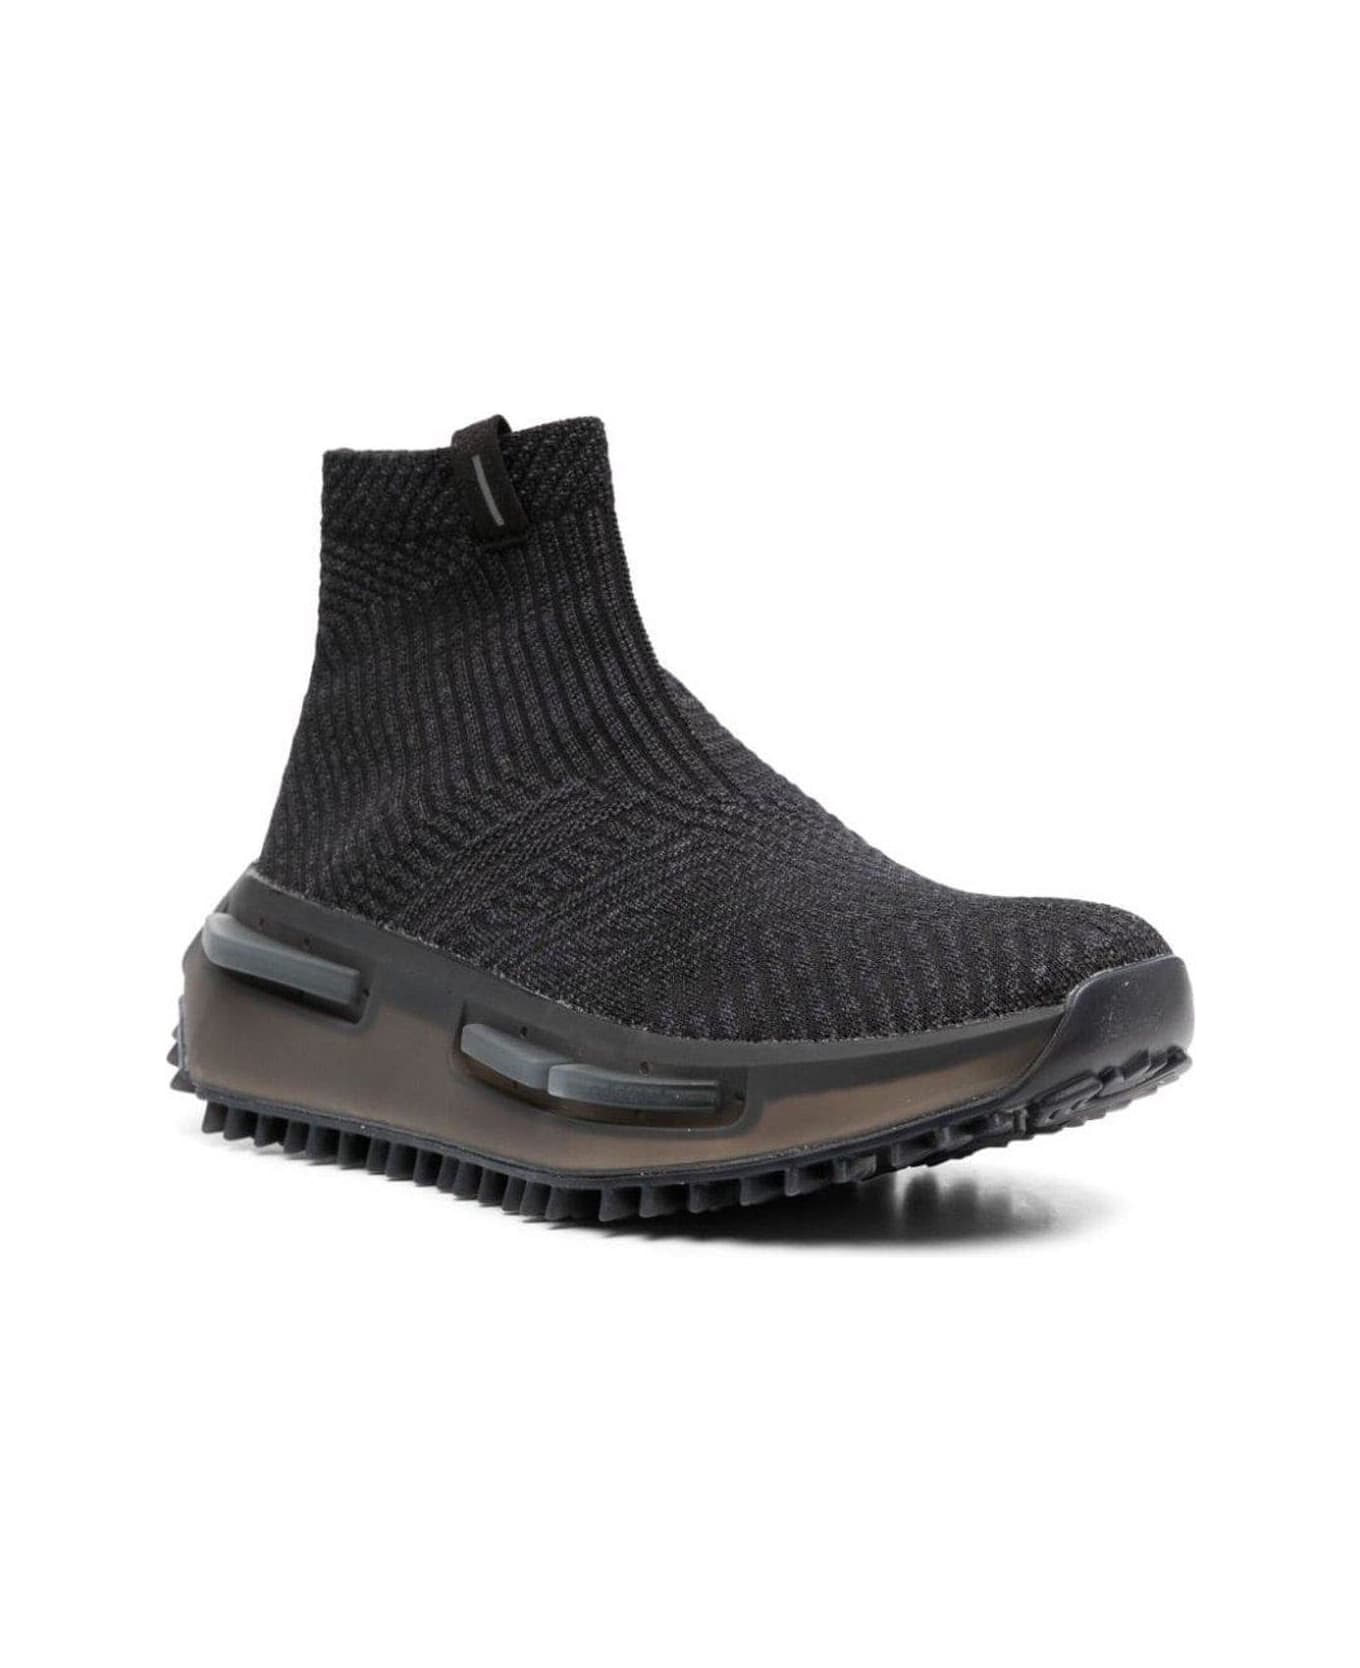 Adidas Originals Originals Sneakers With Sock - Cblack Carbon Cblack